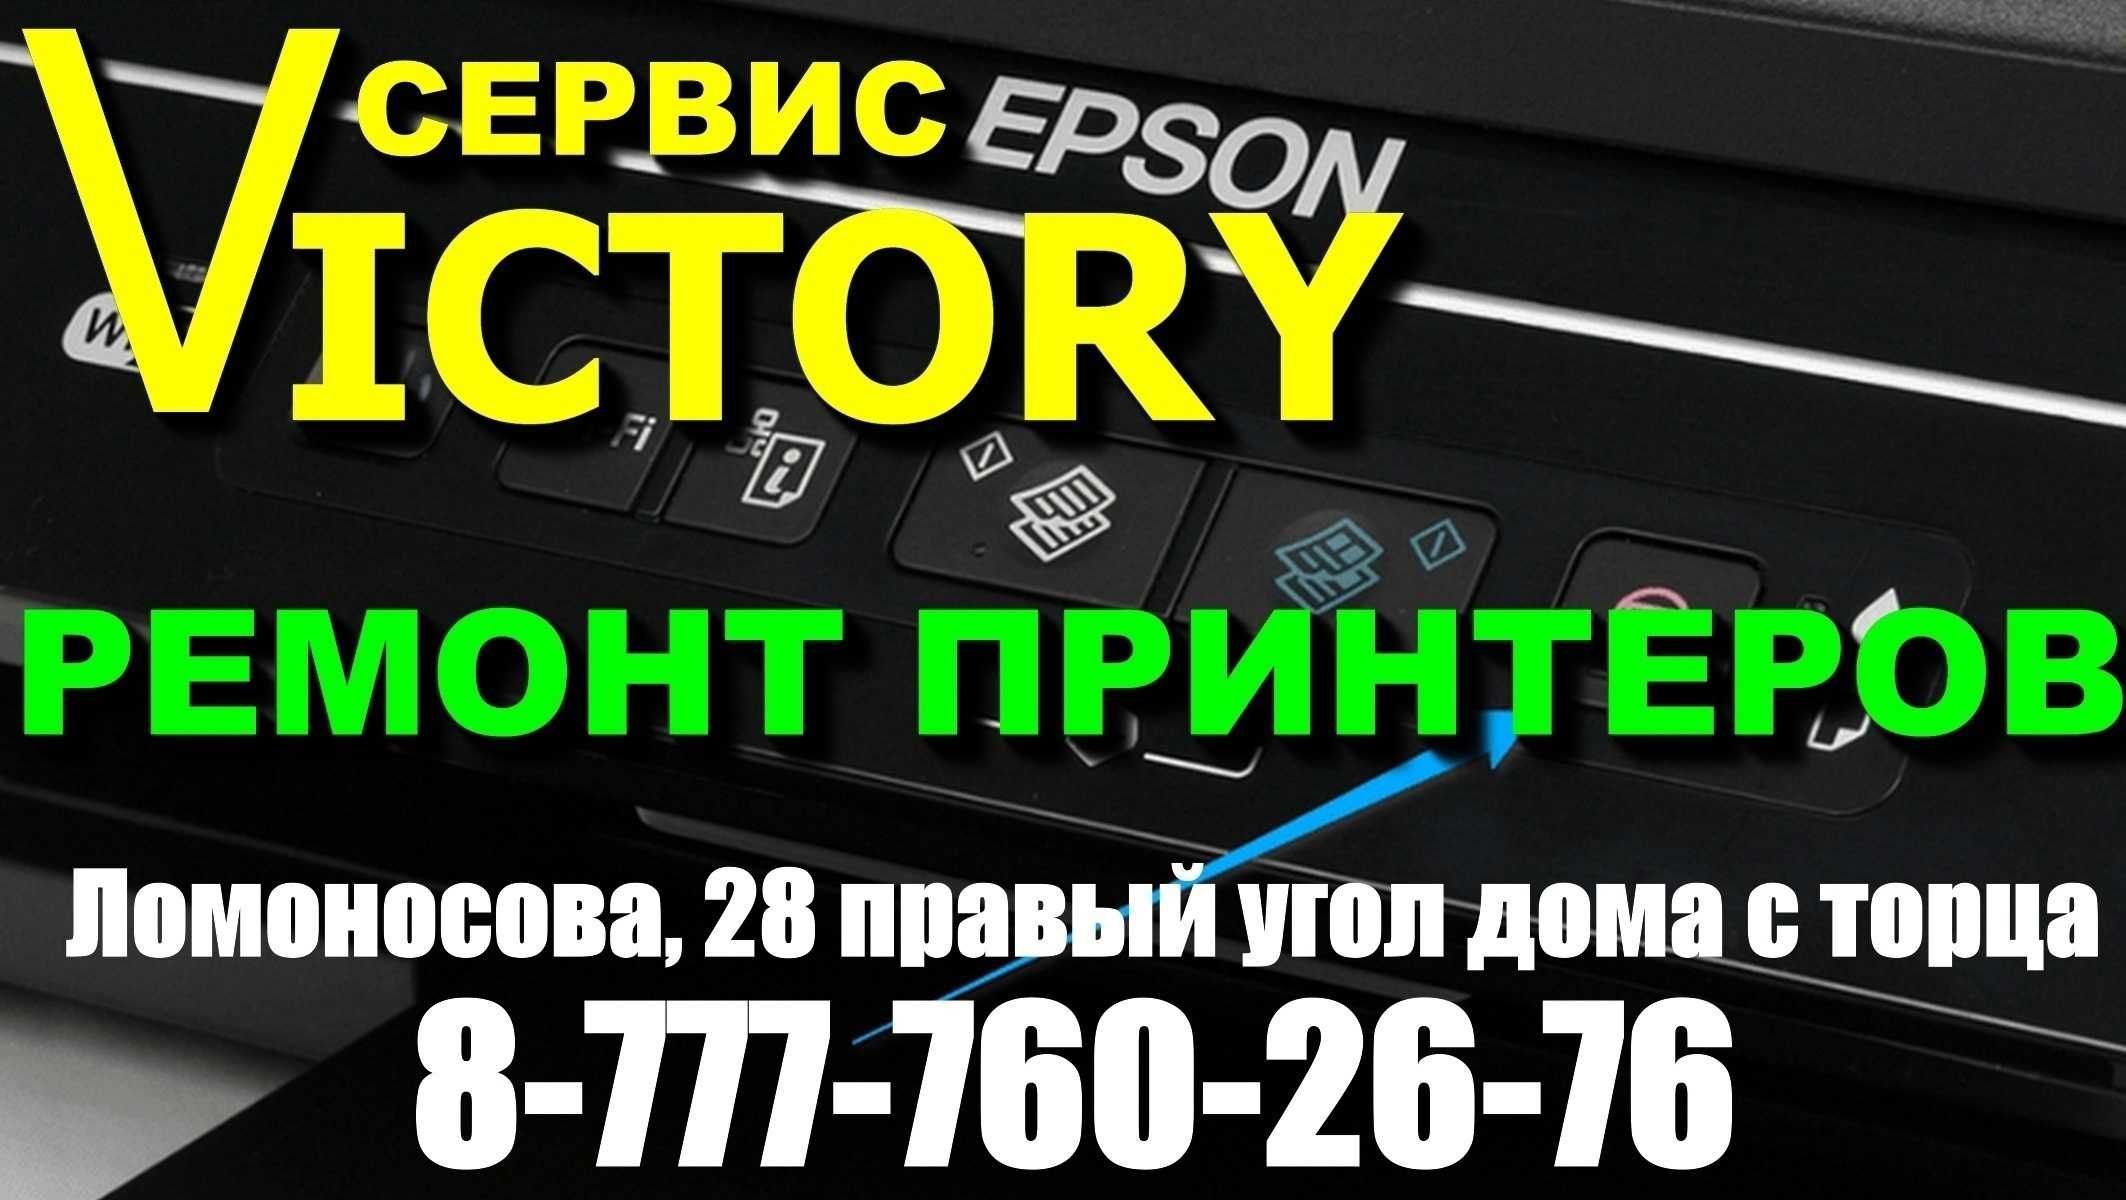 Сервис "VICTORY" сброс абсорбера, ремонт и настройка Epson, Canon.